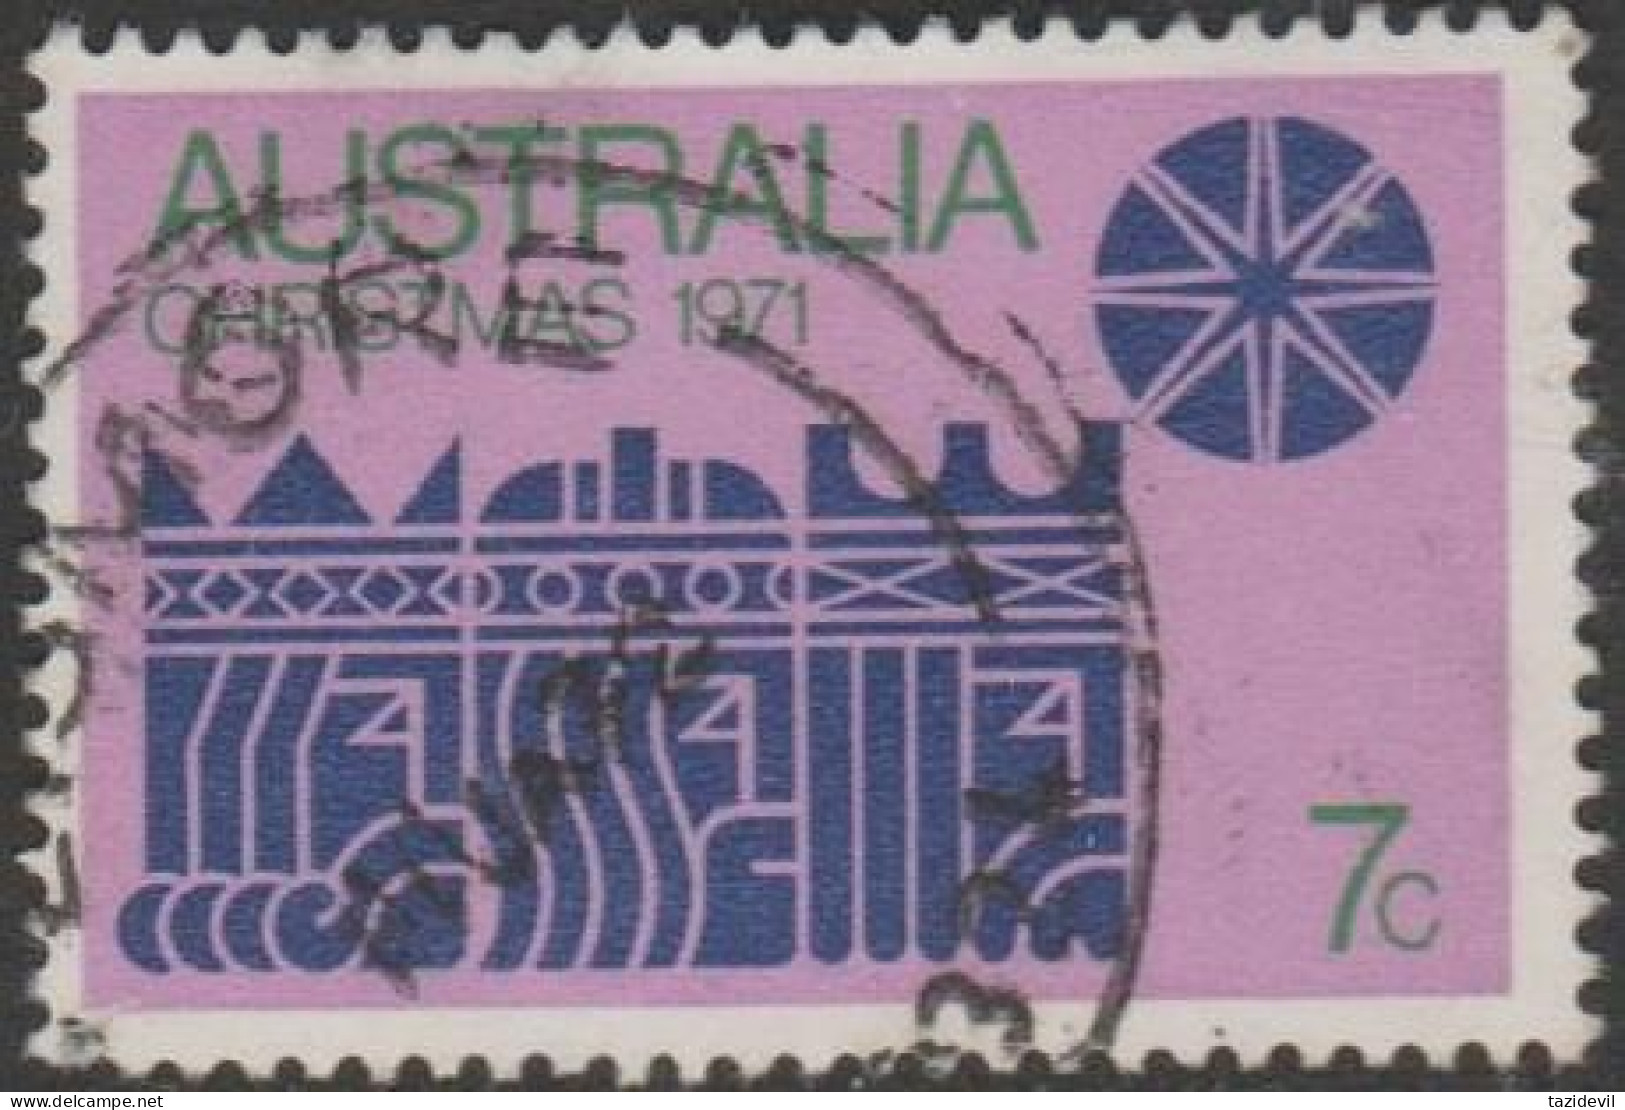 AUSTRALIA - USED 1971 7c Christmas - Green Australia - Used Stamps